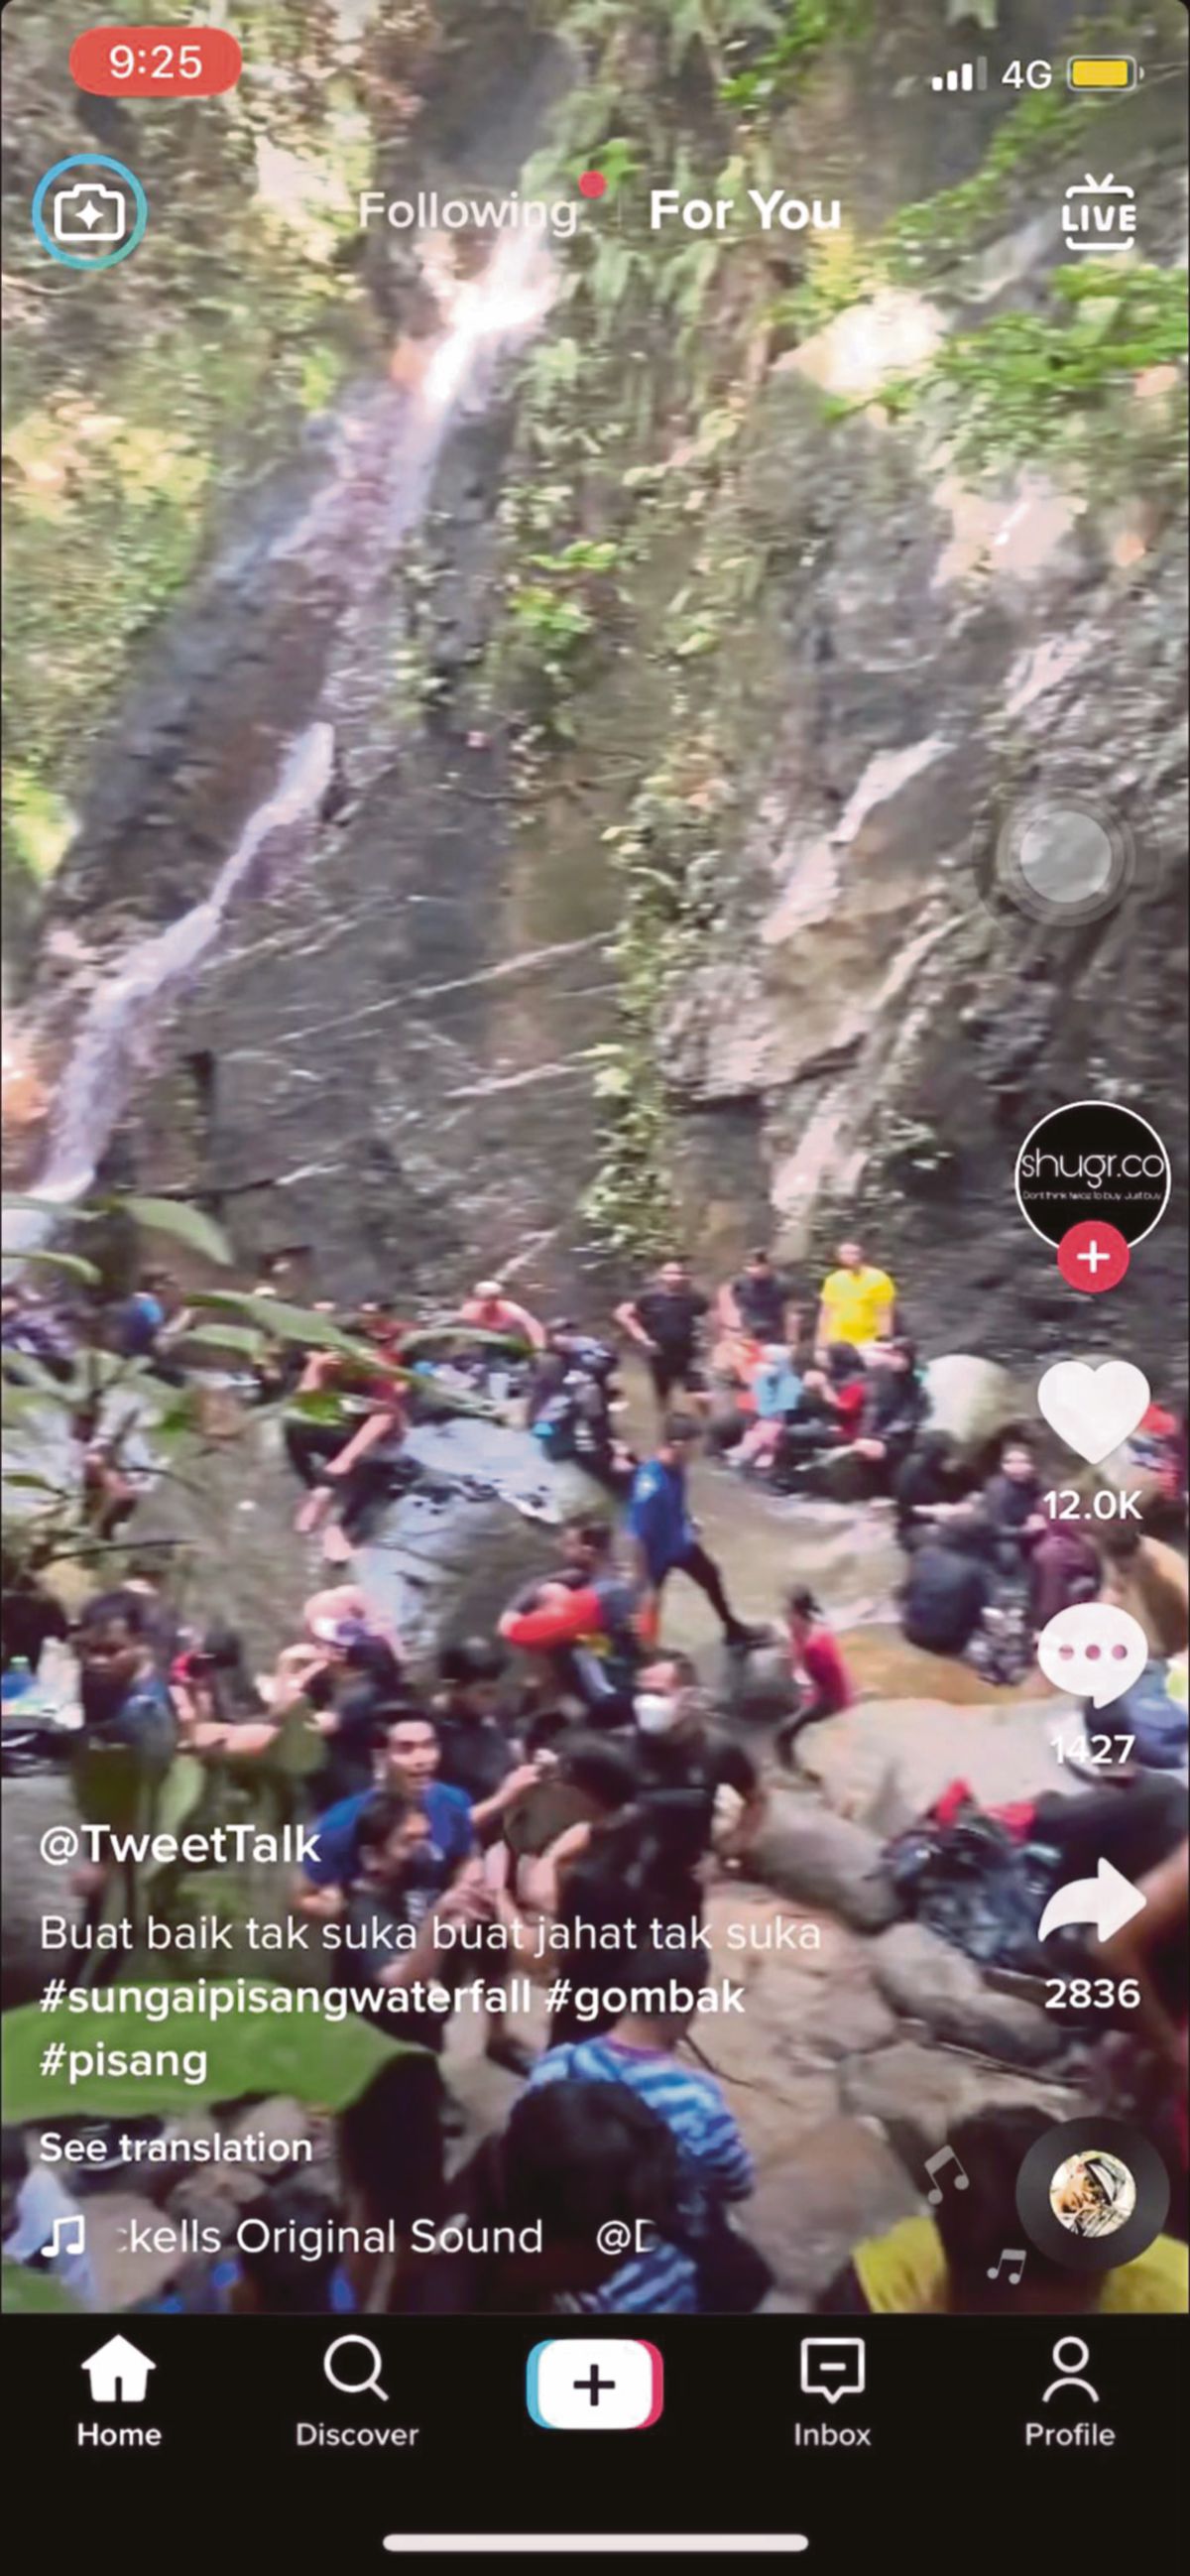 Video yang menunjukkan betapa ramainya pengunjung di kawasan rekreasi Sungai Pisang tular.